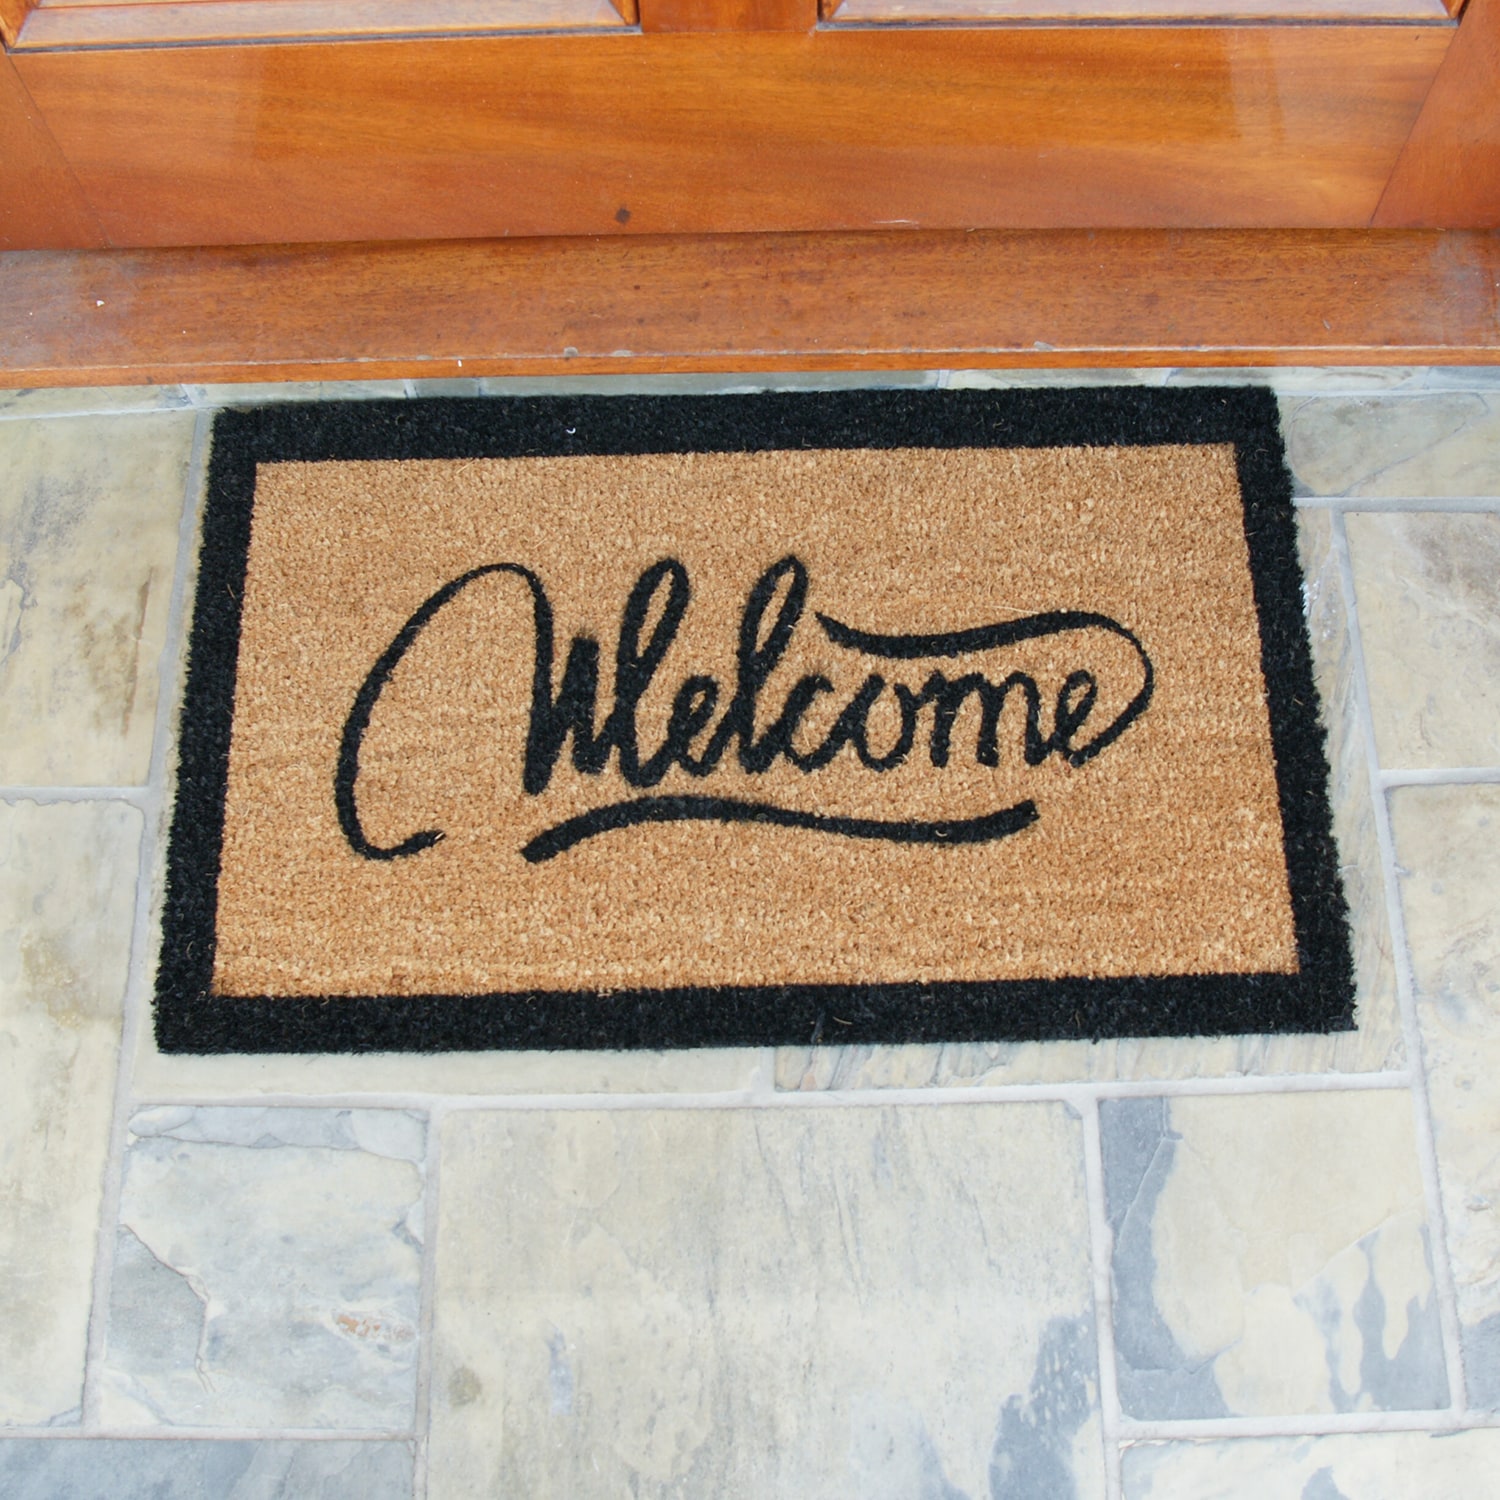  Rubber-Cal Contemporary Welcome Home Mats Natural Coir  Matting, 18 x 30-Inch : Doormat : Patio, Lawn & Garden